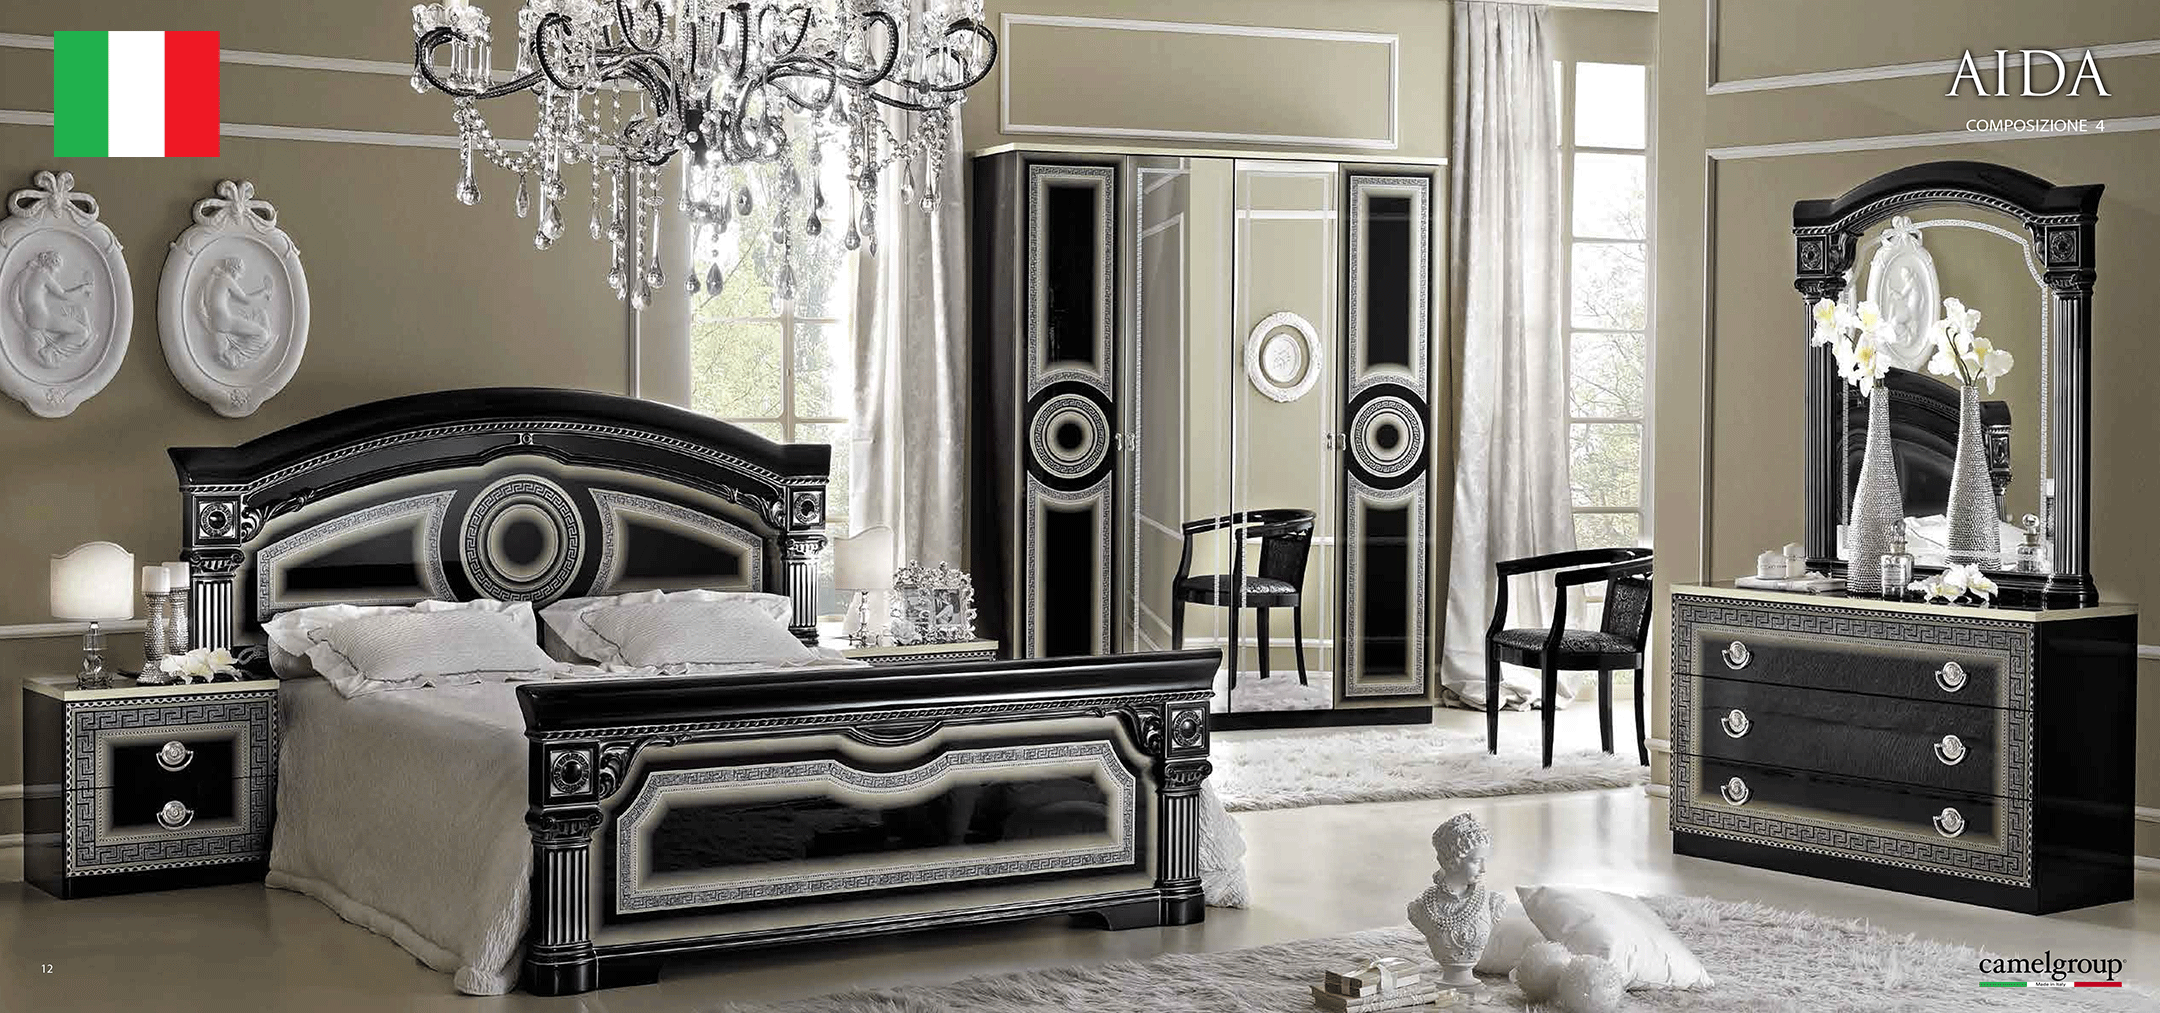 Bedroom Furniture Nightstands Aida Bedroom Black/Silver, Camelgroup Italy